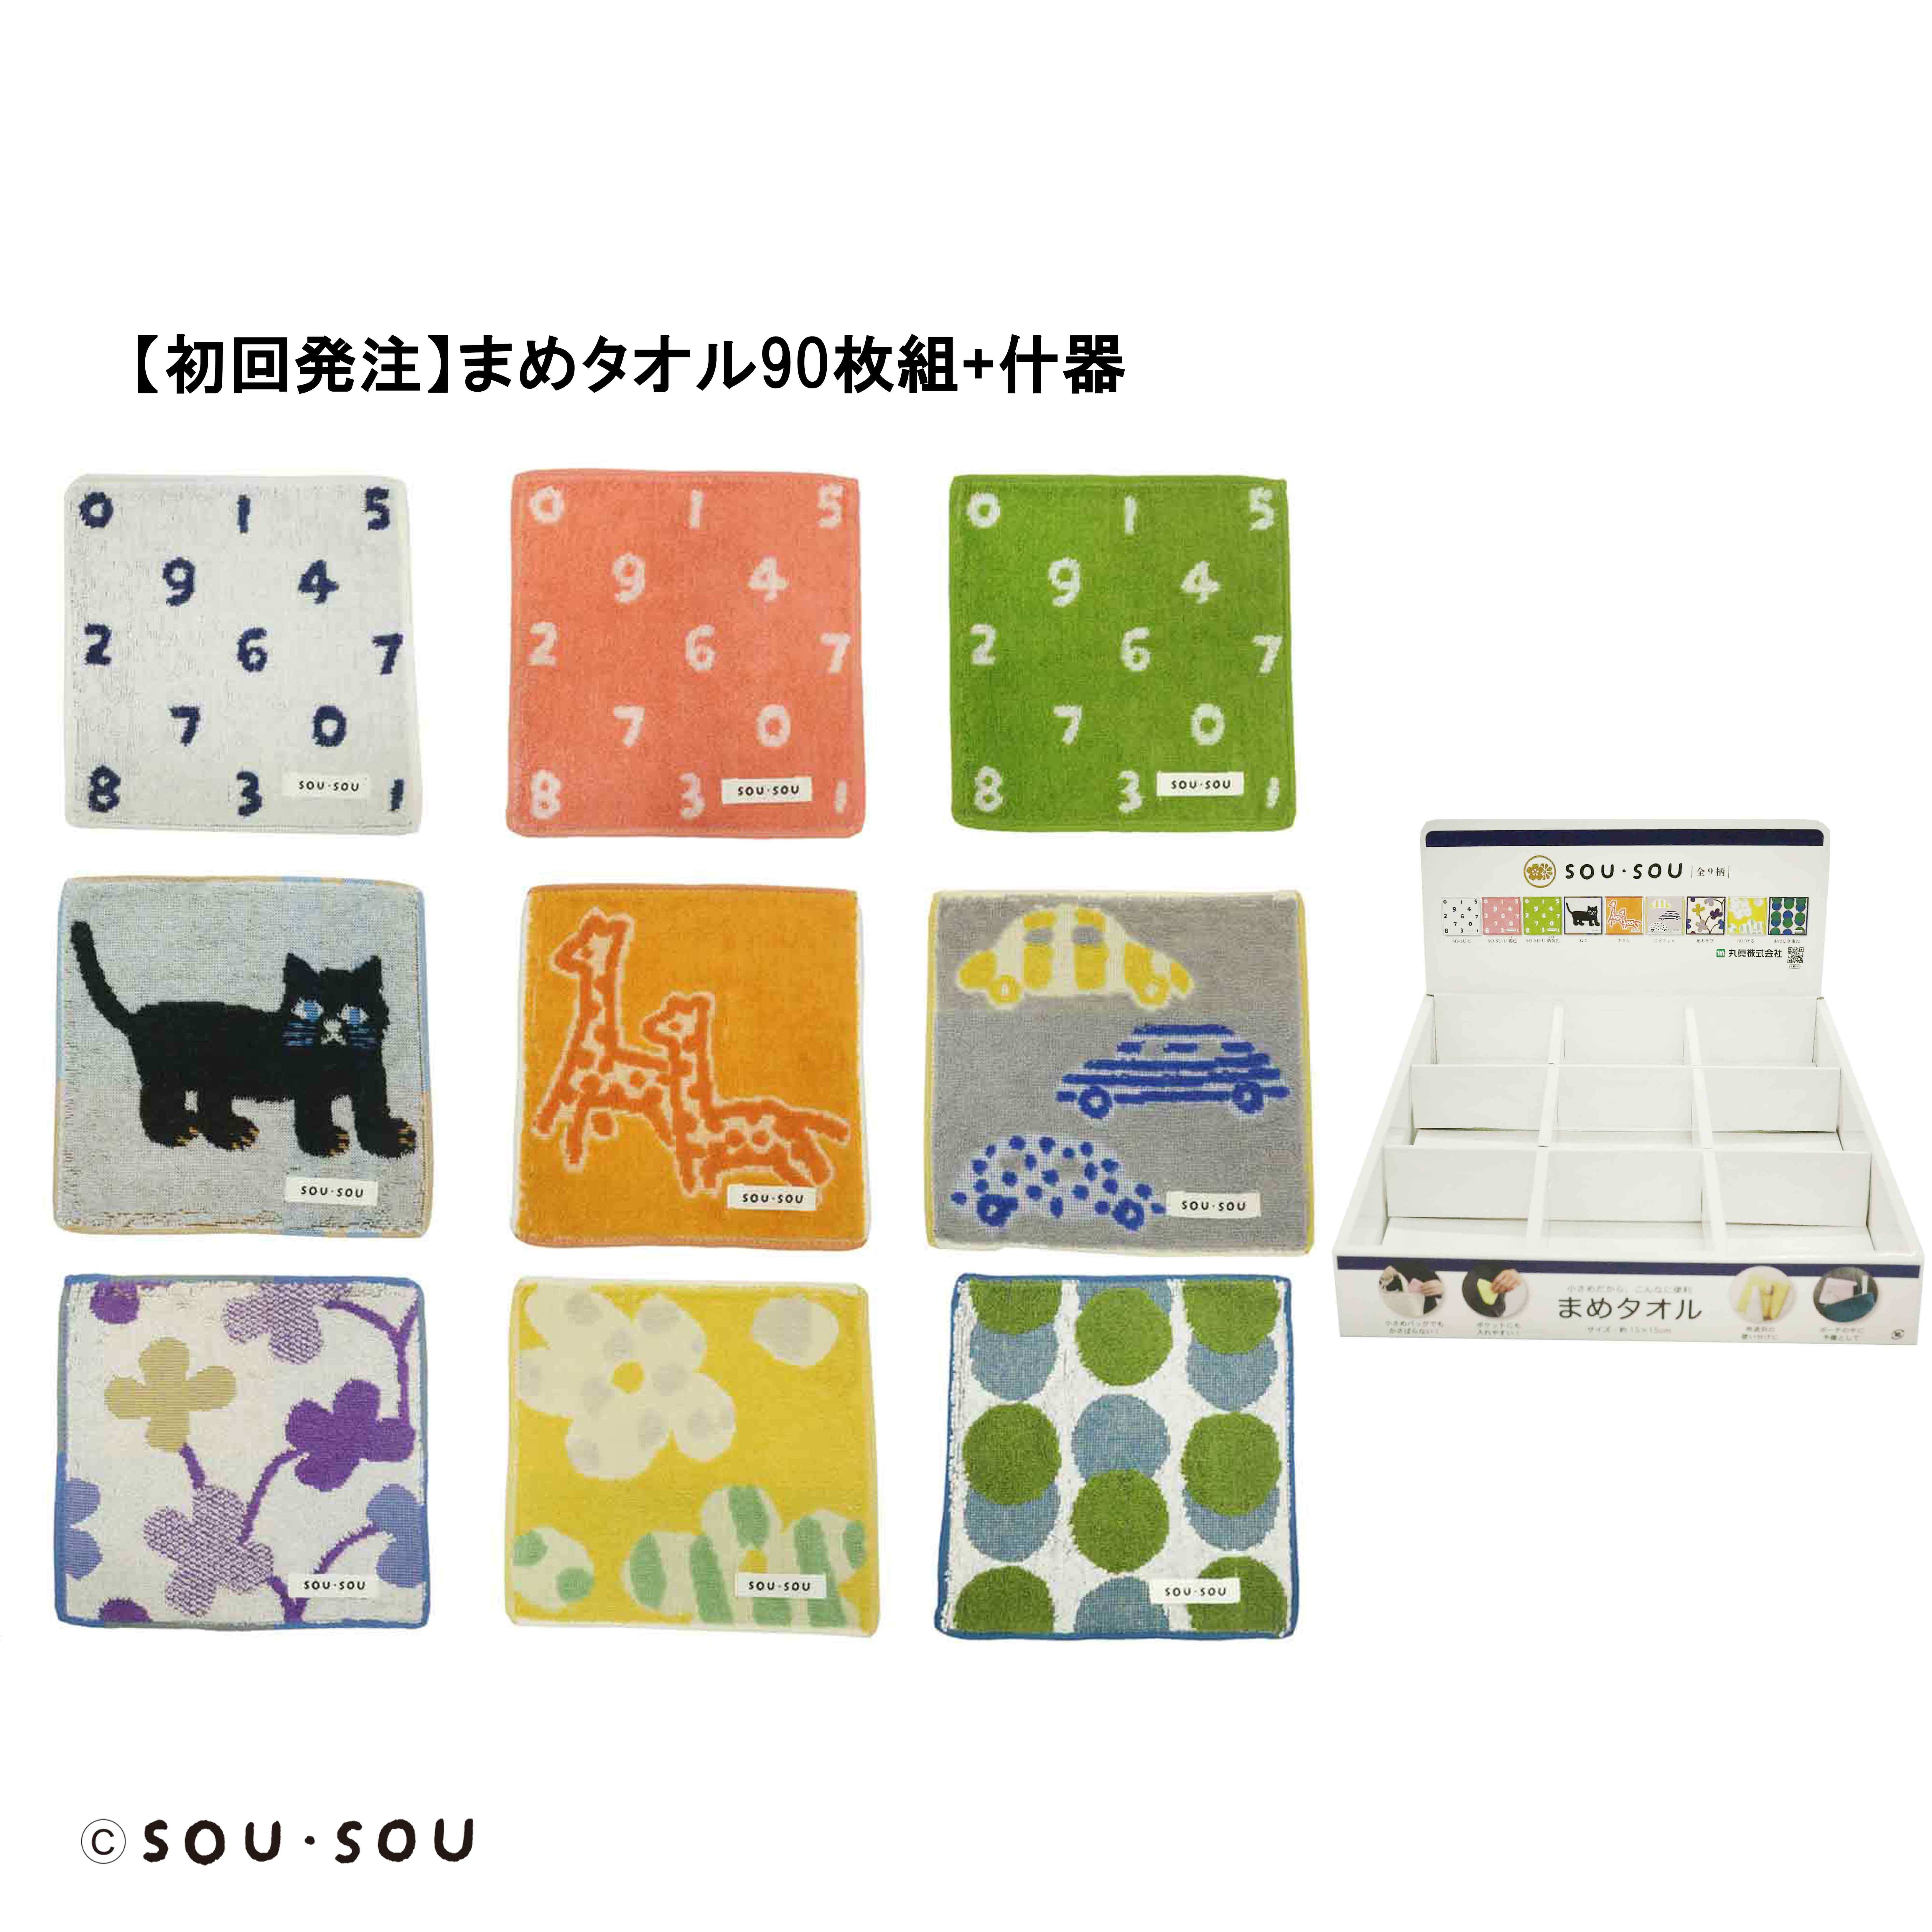 SOU・SOU | タオル製品をはじめ、寝装品・贈答品・インテリア・雑貨等